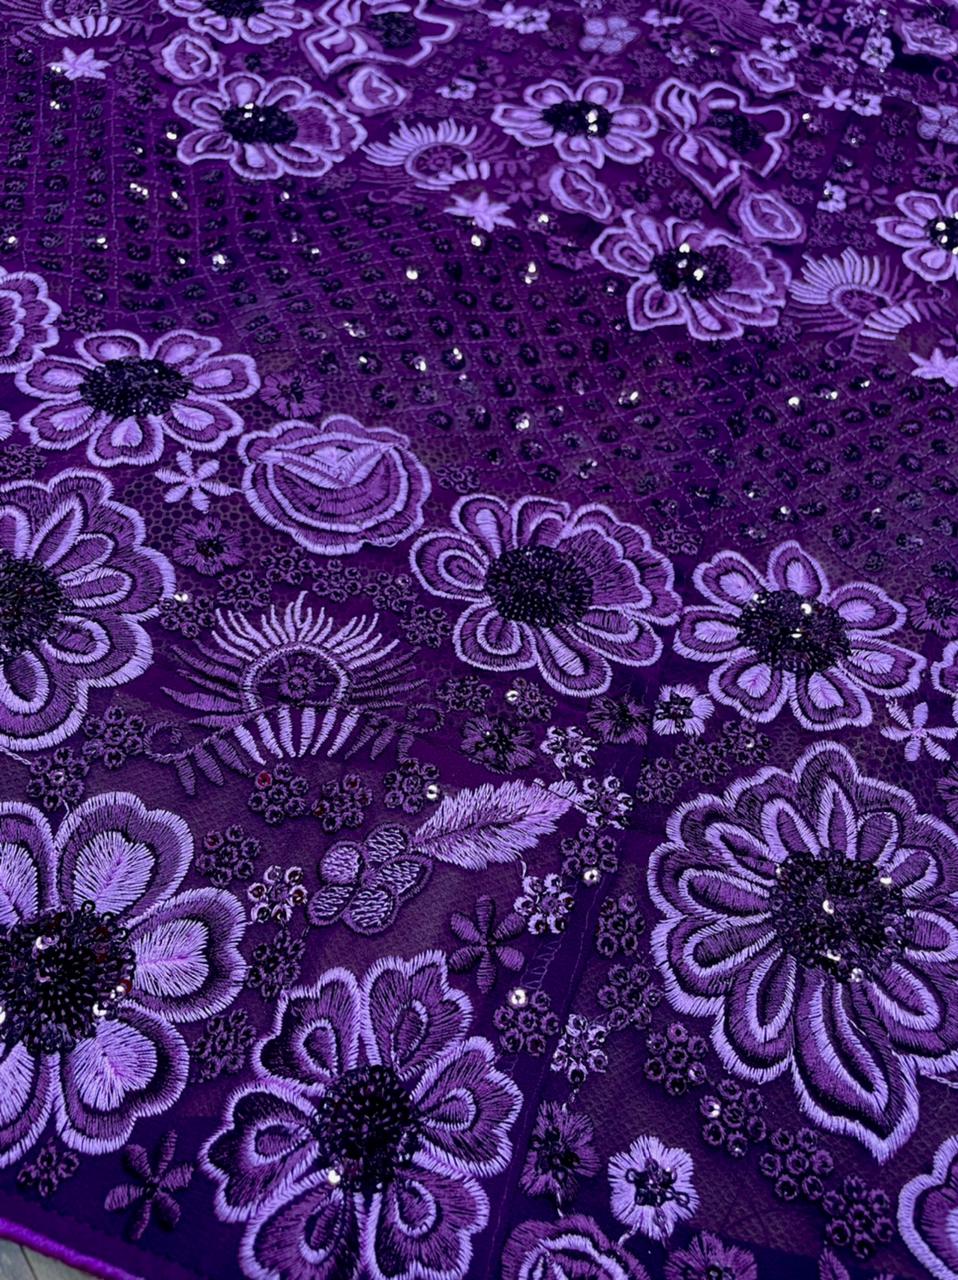 Buy Purple Lehenga online in India